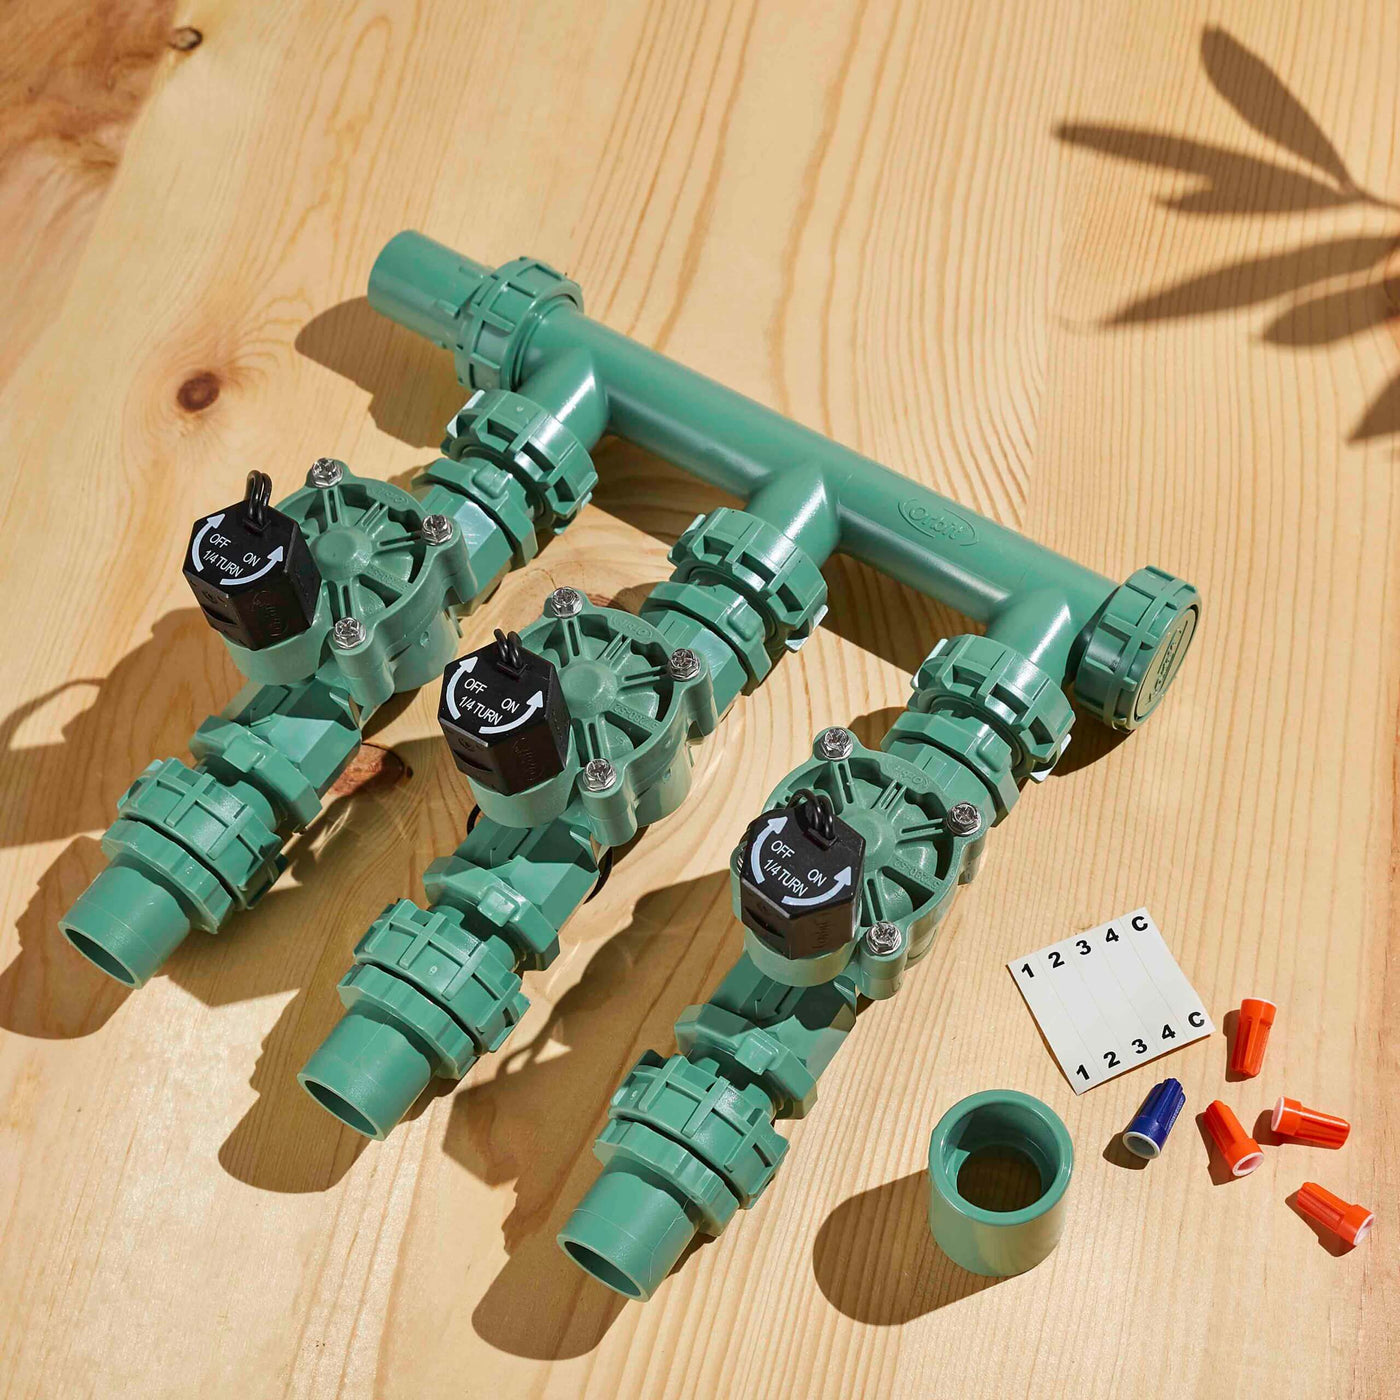 57253 - Three valve preassembled sprinkler manifold. Everything you need in one preassembled sprinkler manifold package.